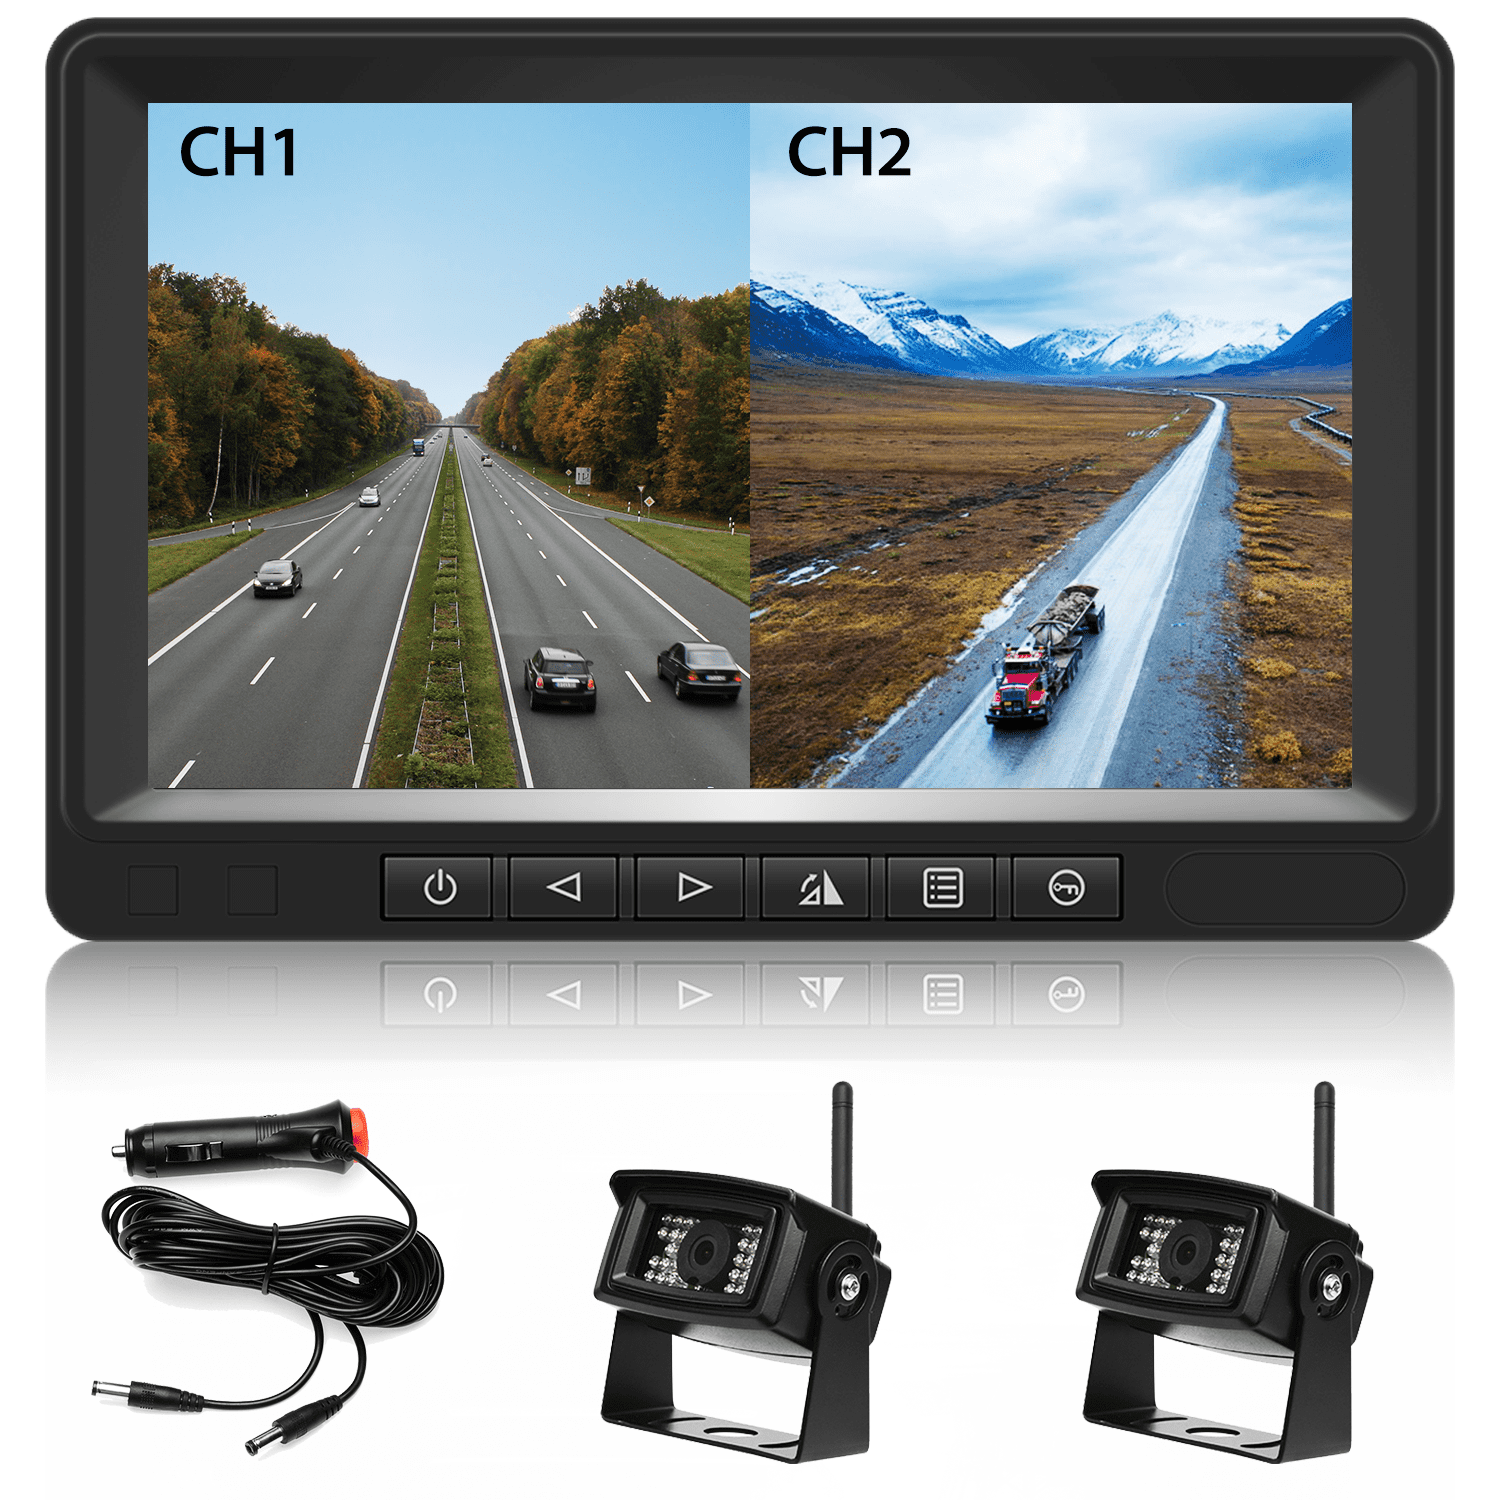 Truck RV Digital Wireless IR Rear View Backup 170° Camera System 7" LCD Monitor 